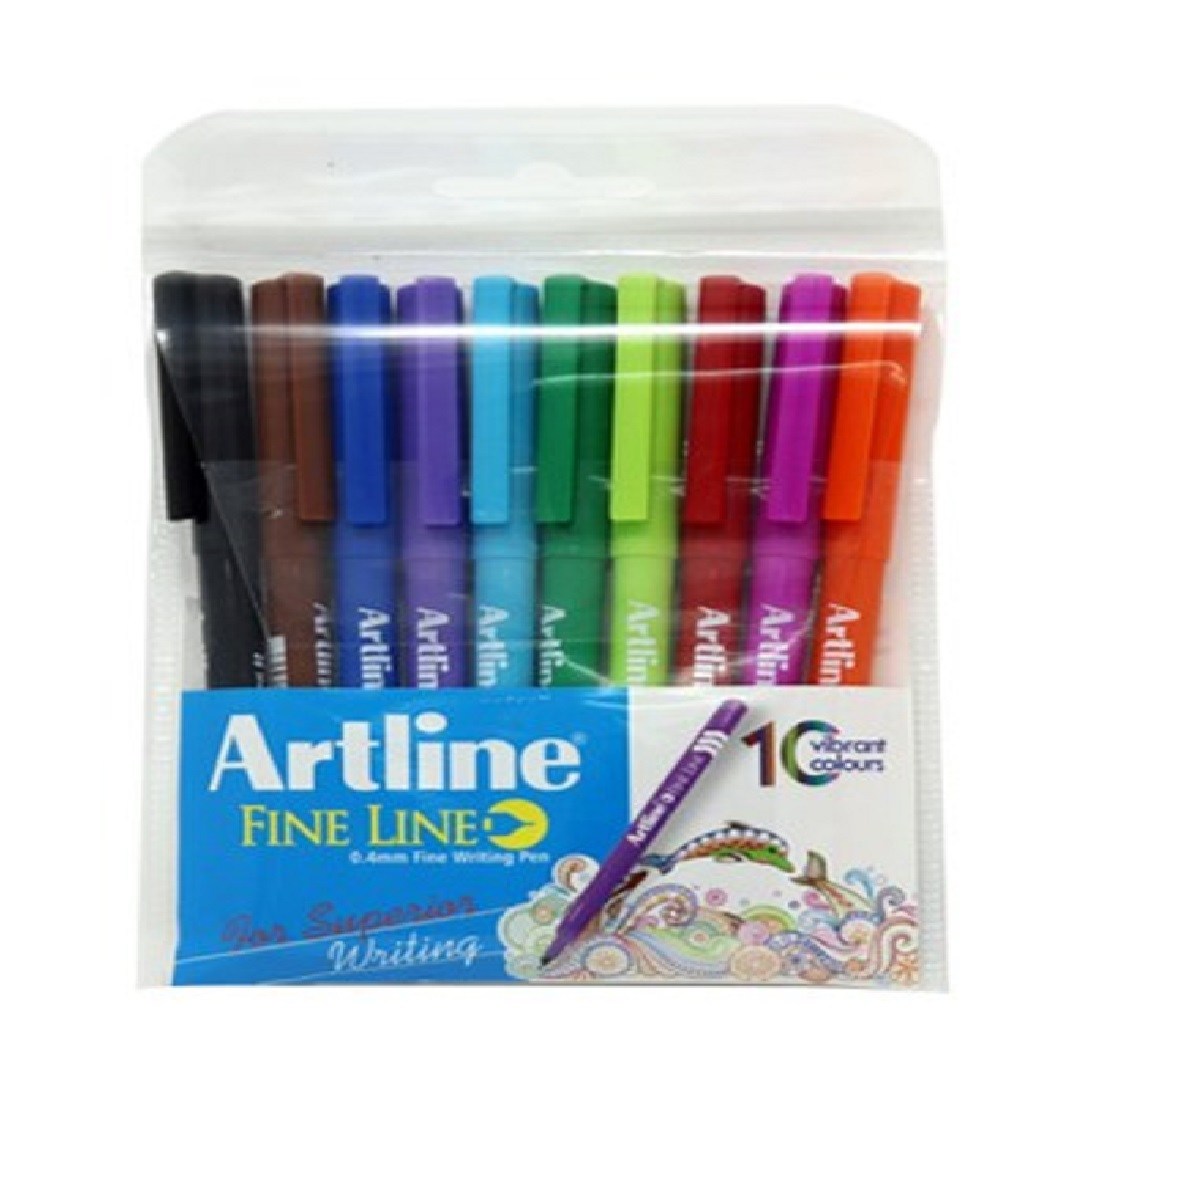 Artline Fine Line 0.4mm Fine Writing Pen Orange